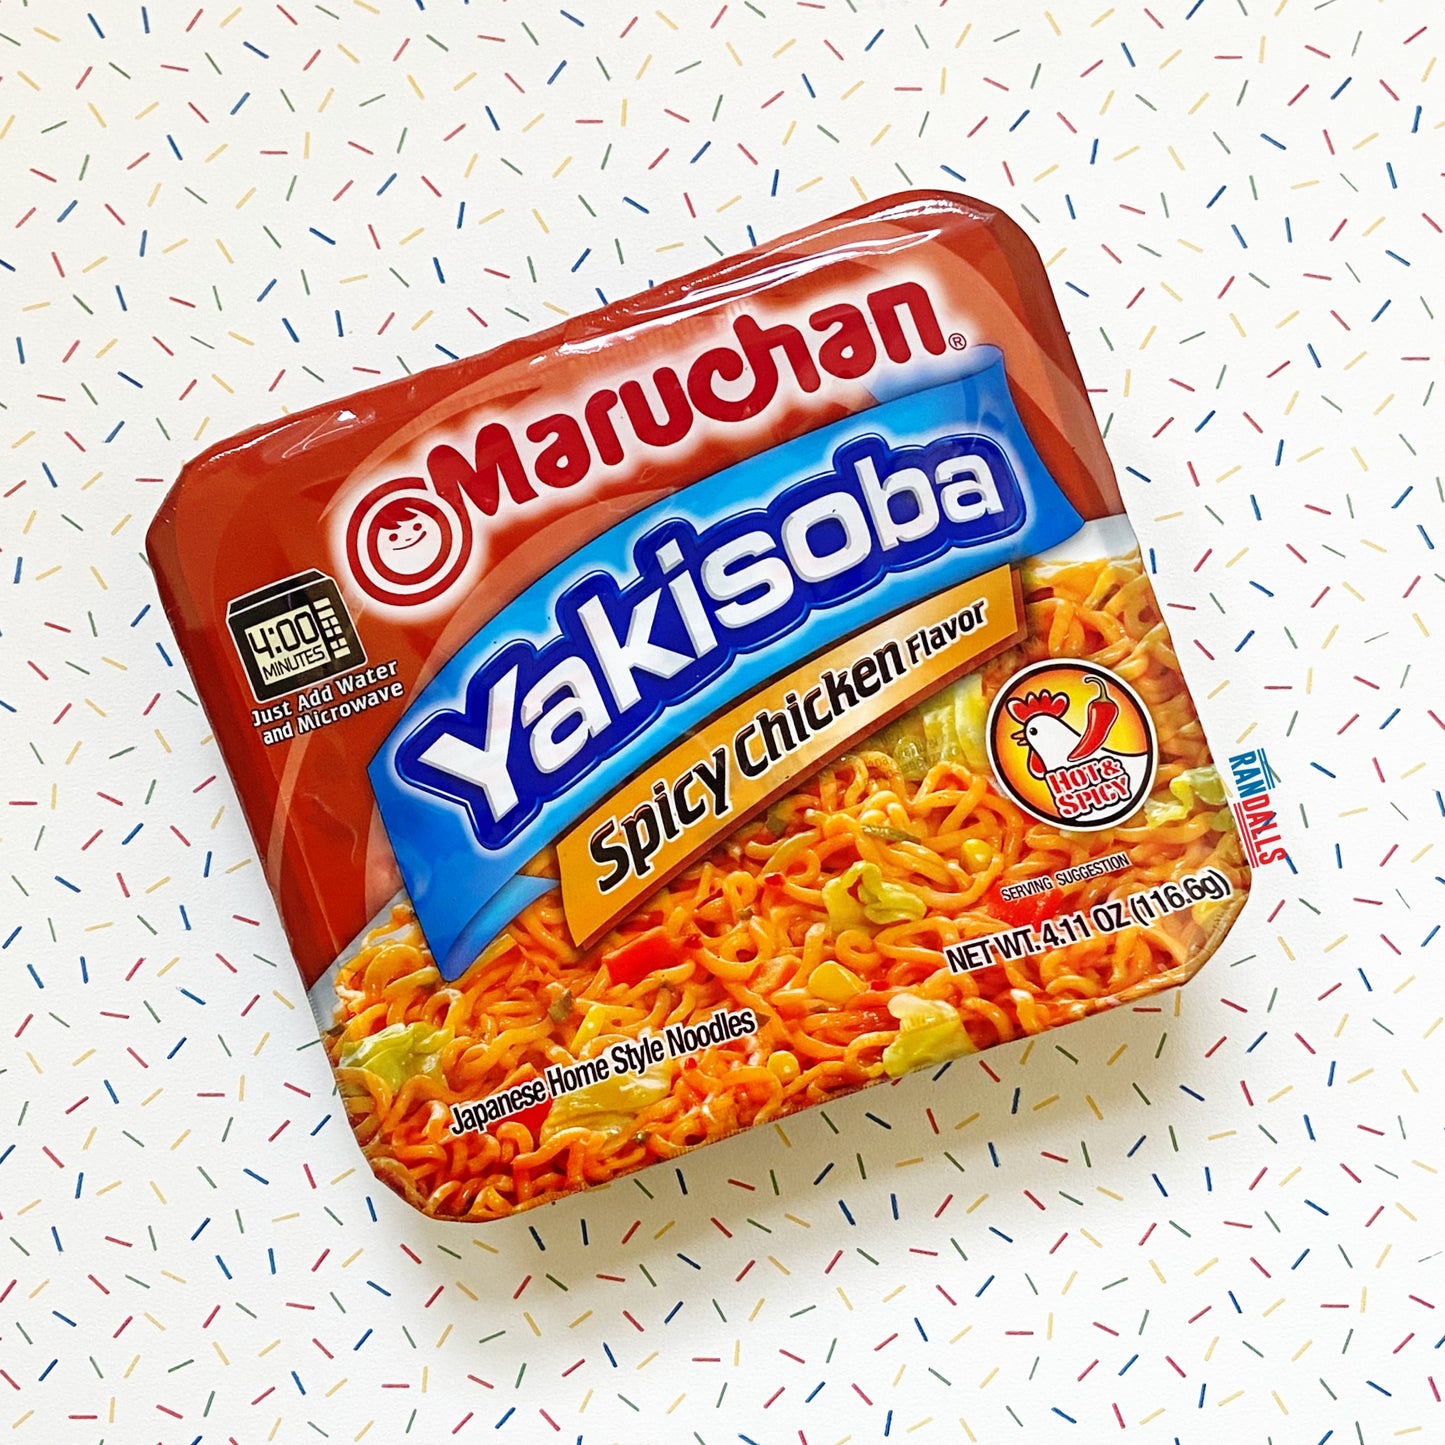 maruchan, maruchan yakisoba spicy chicken, yakisoba, maruchan yakisoba, japanese home style noodles, noodles, spicy chicken, hot & spicy, american, randalls, randallsuk